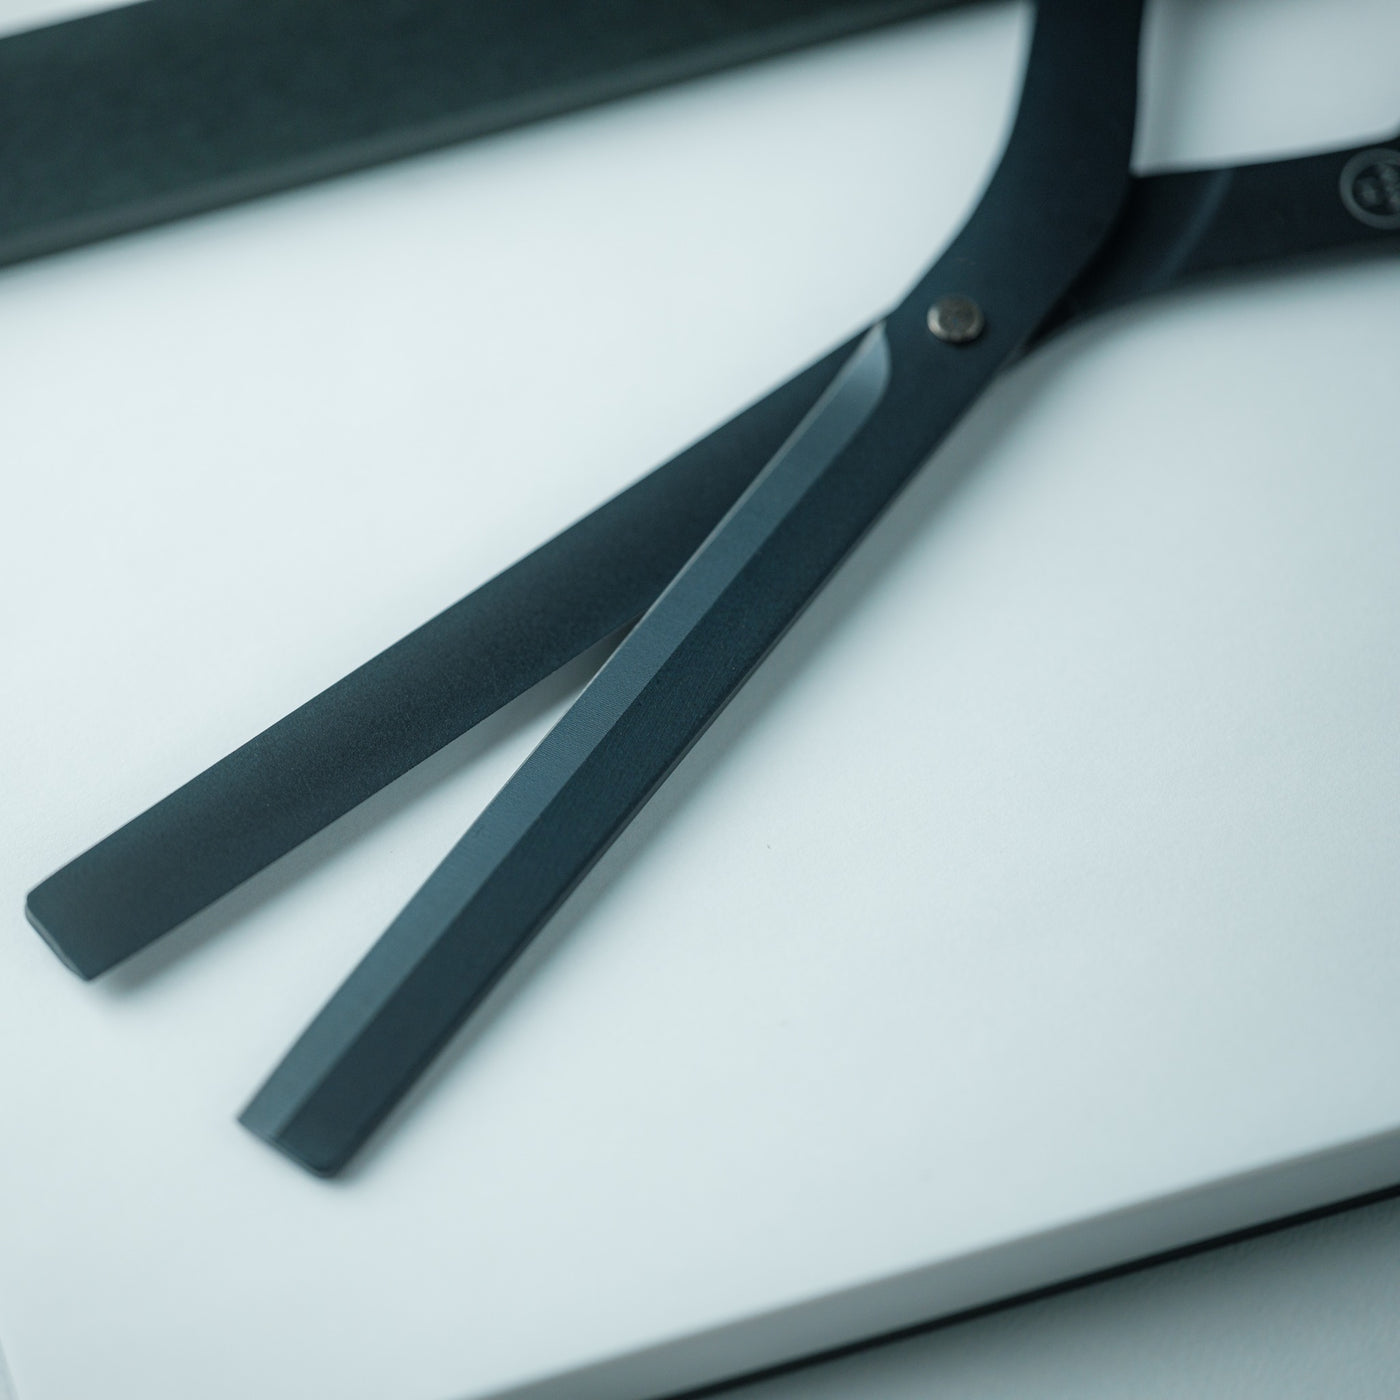 This 2-in-1 scissor design breaks tradition, takes center stage on desks -  Yanko Design